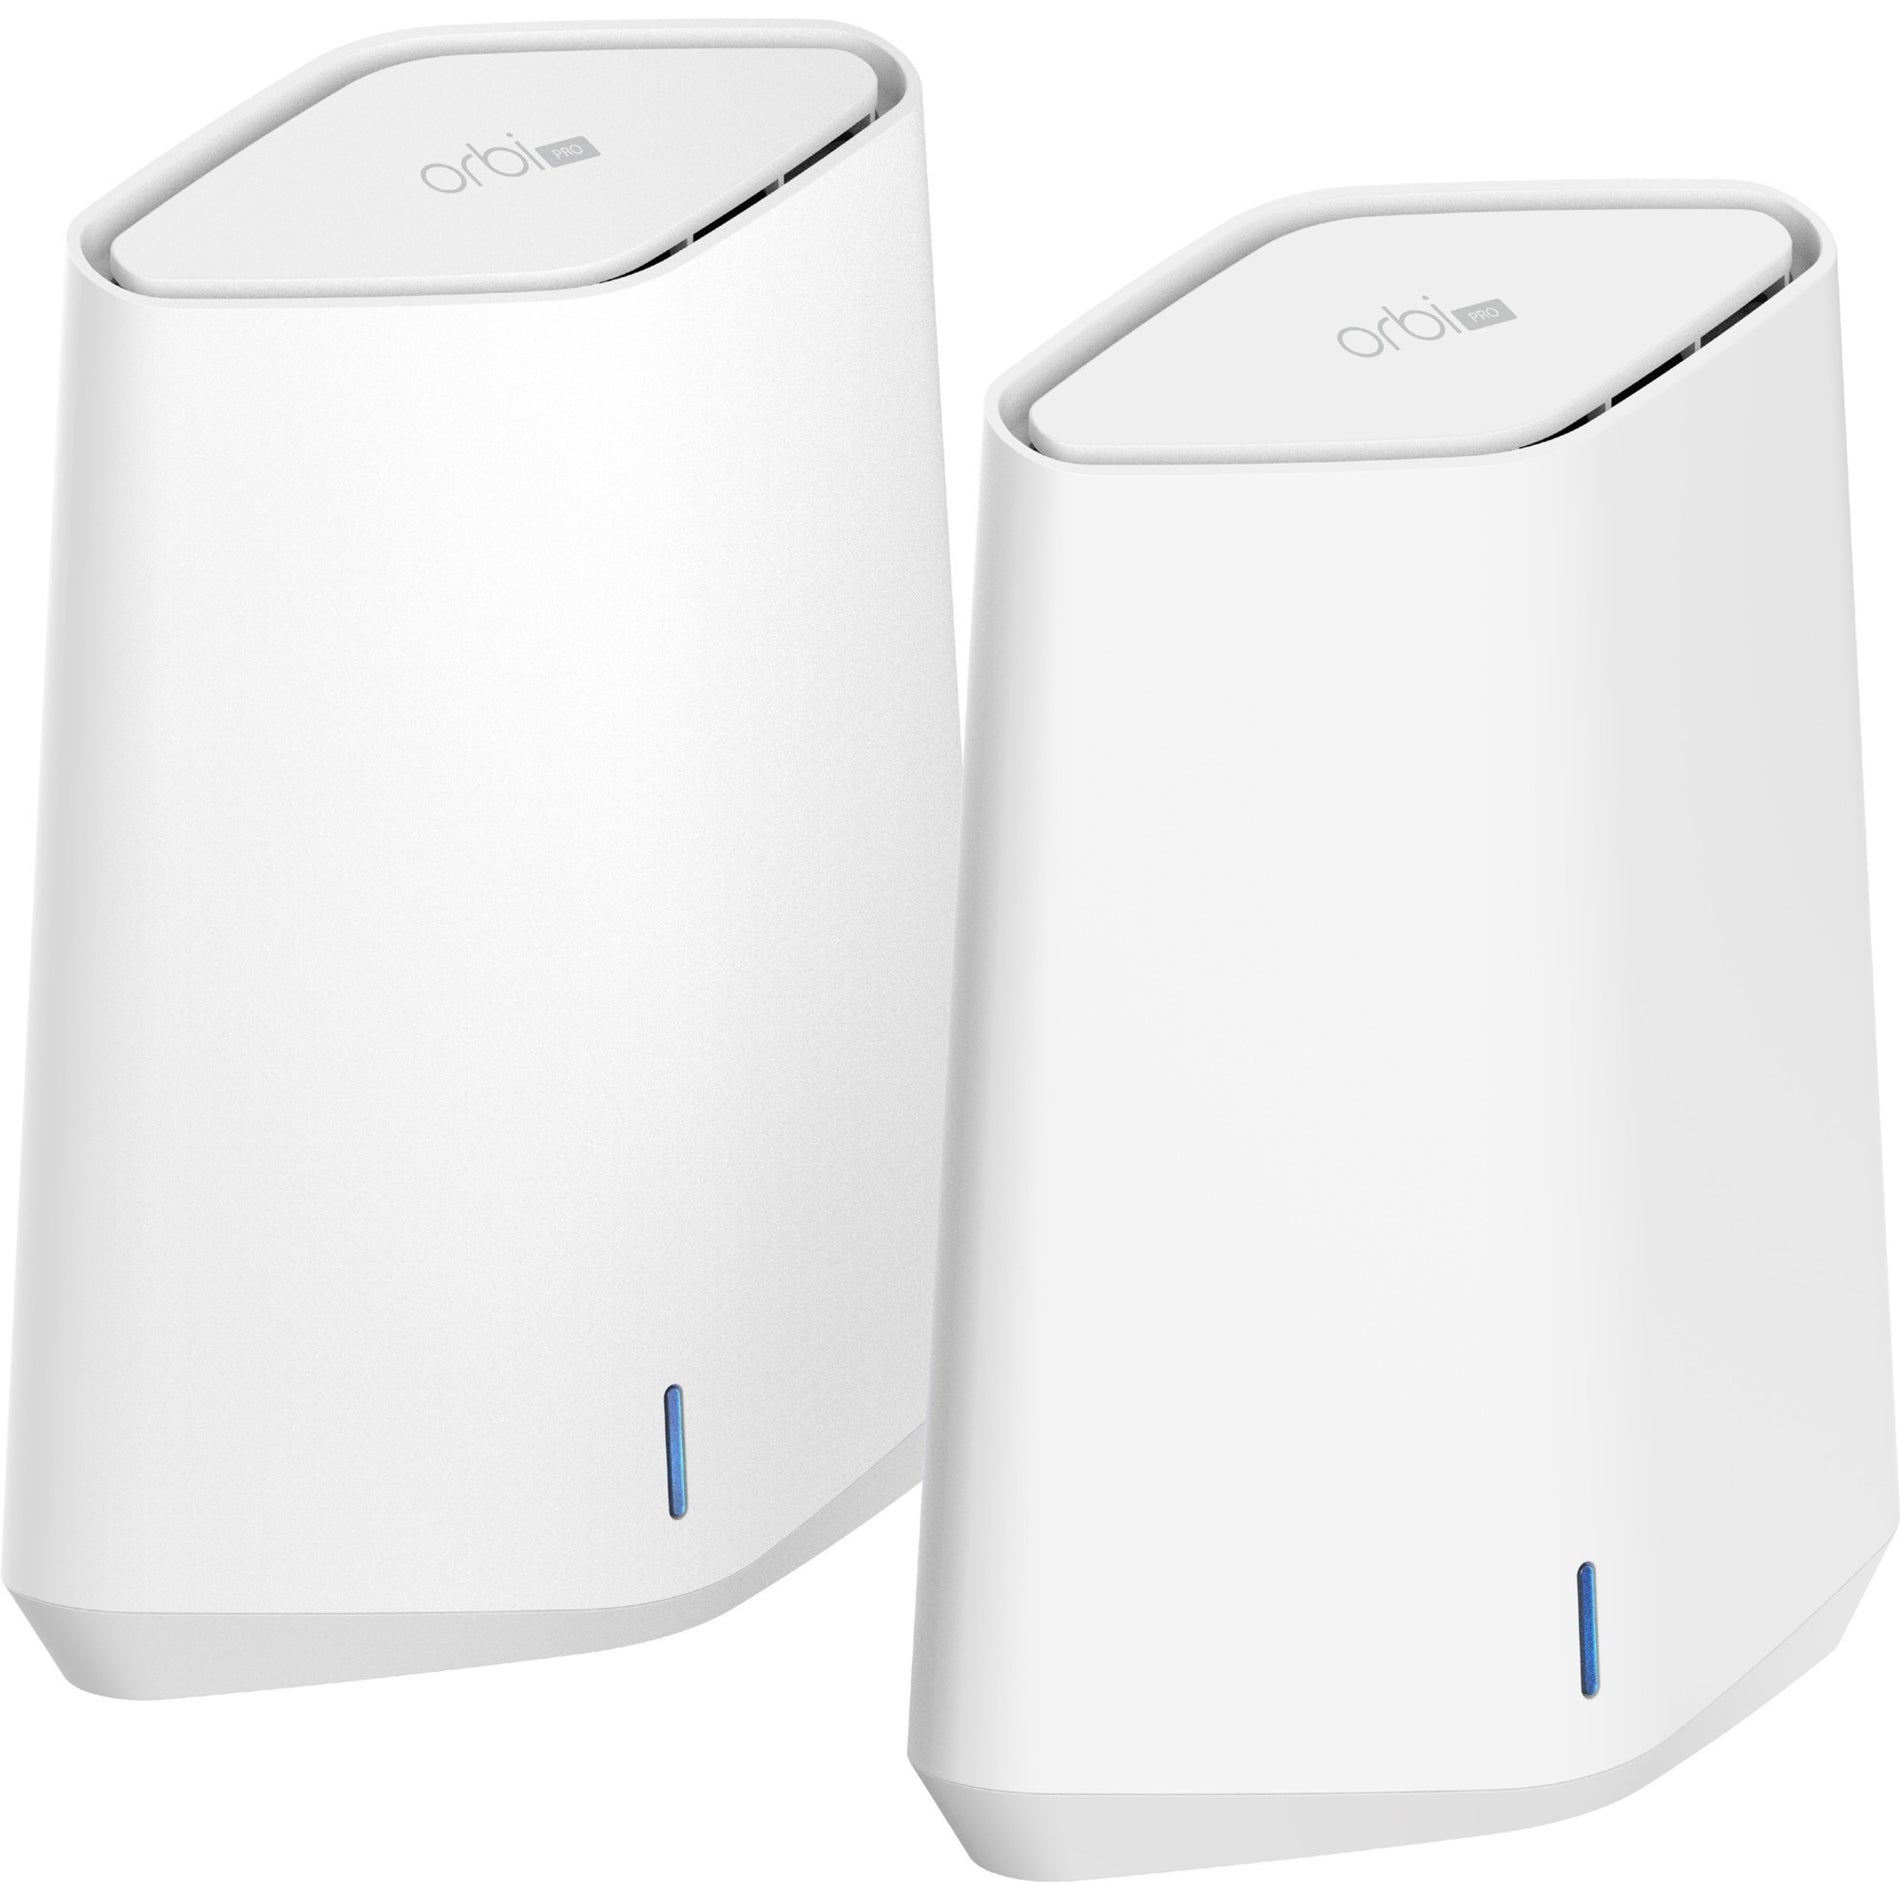 Netgear SXK30-100NAS Orbi Pro WiFi 6 Mini - AX1800 WiFi System, Gigabit Ethernet, 225 MB/s